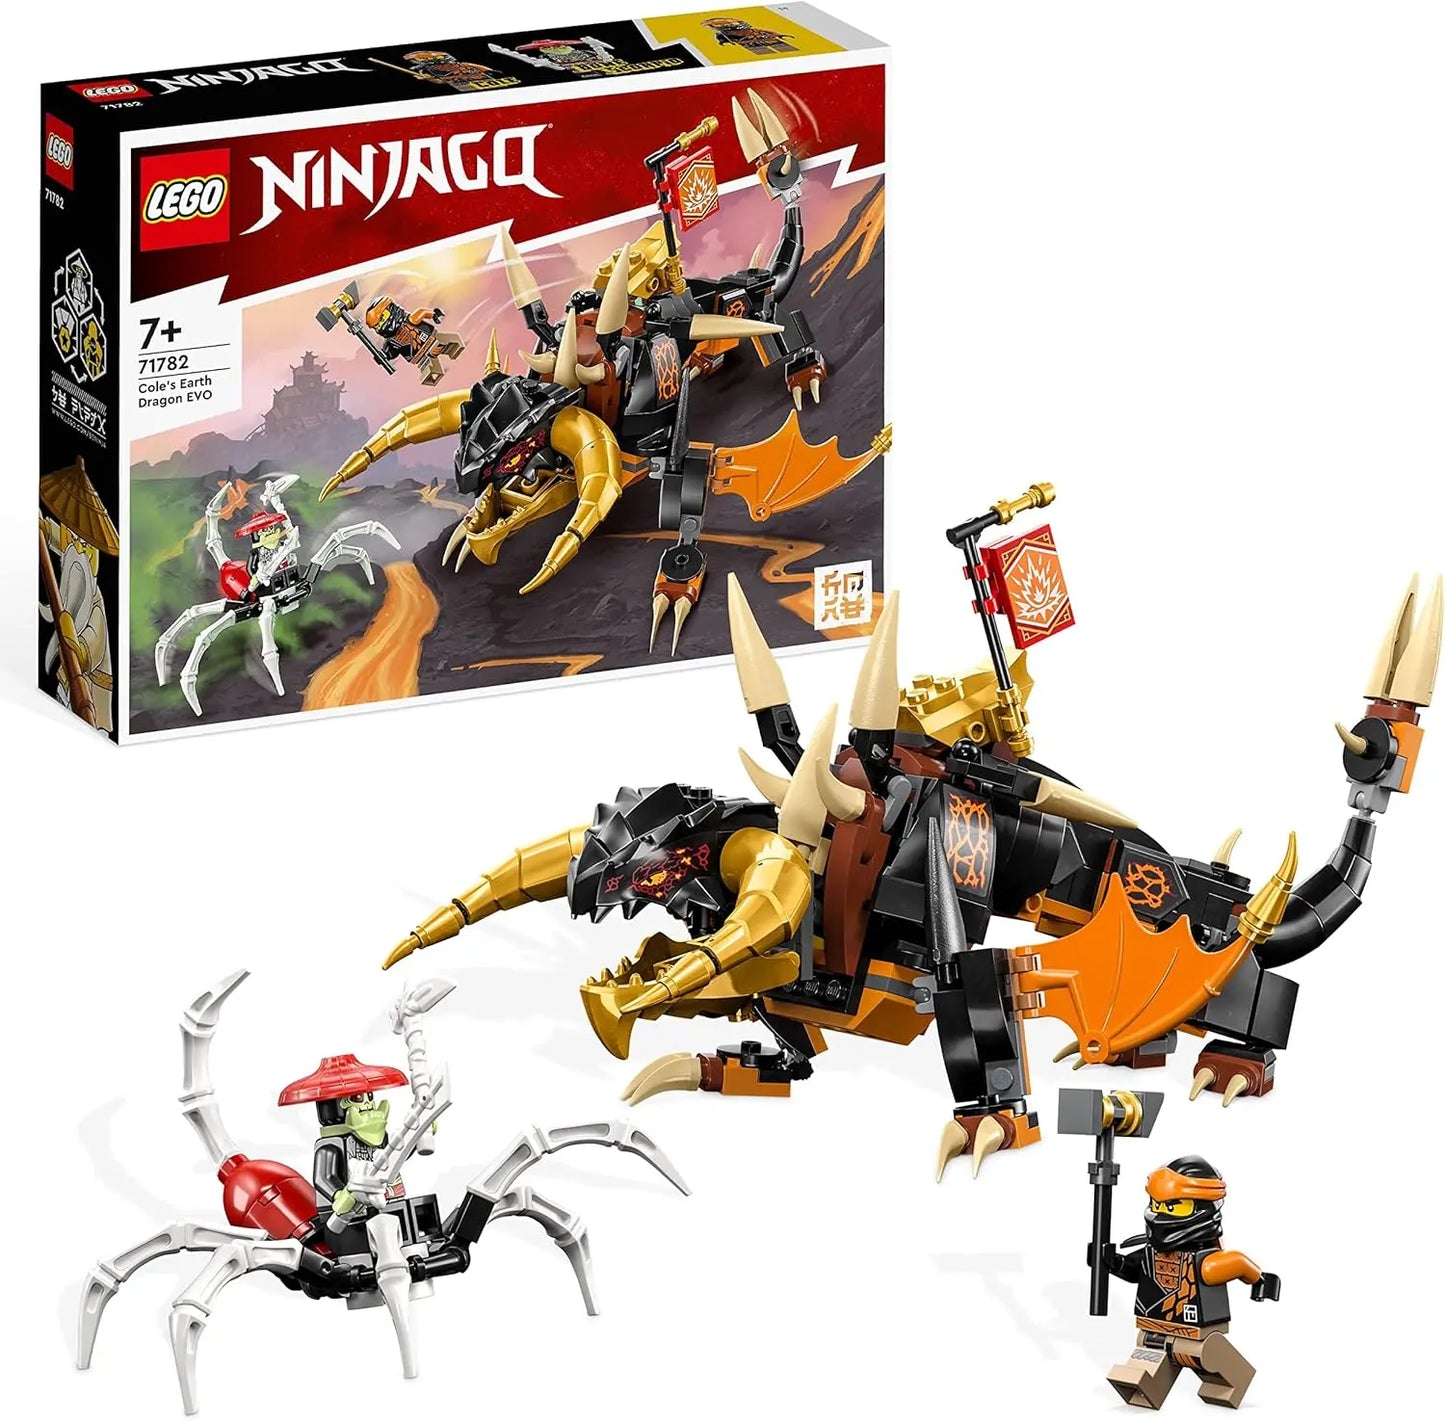 jouet LEGO Ninjago 71782 Le Dragon de terre de Cole lego